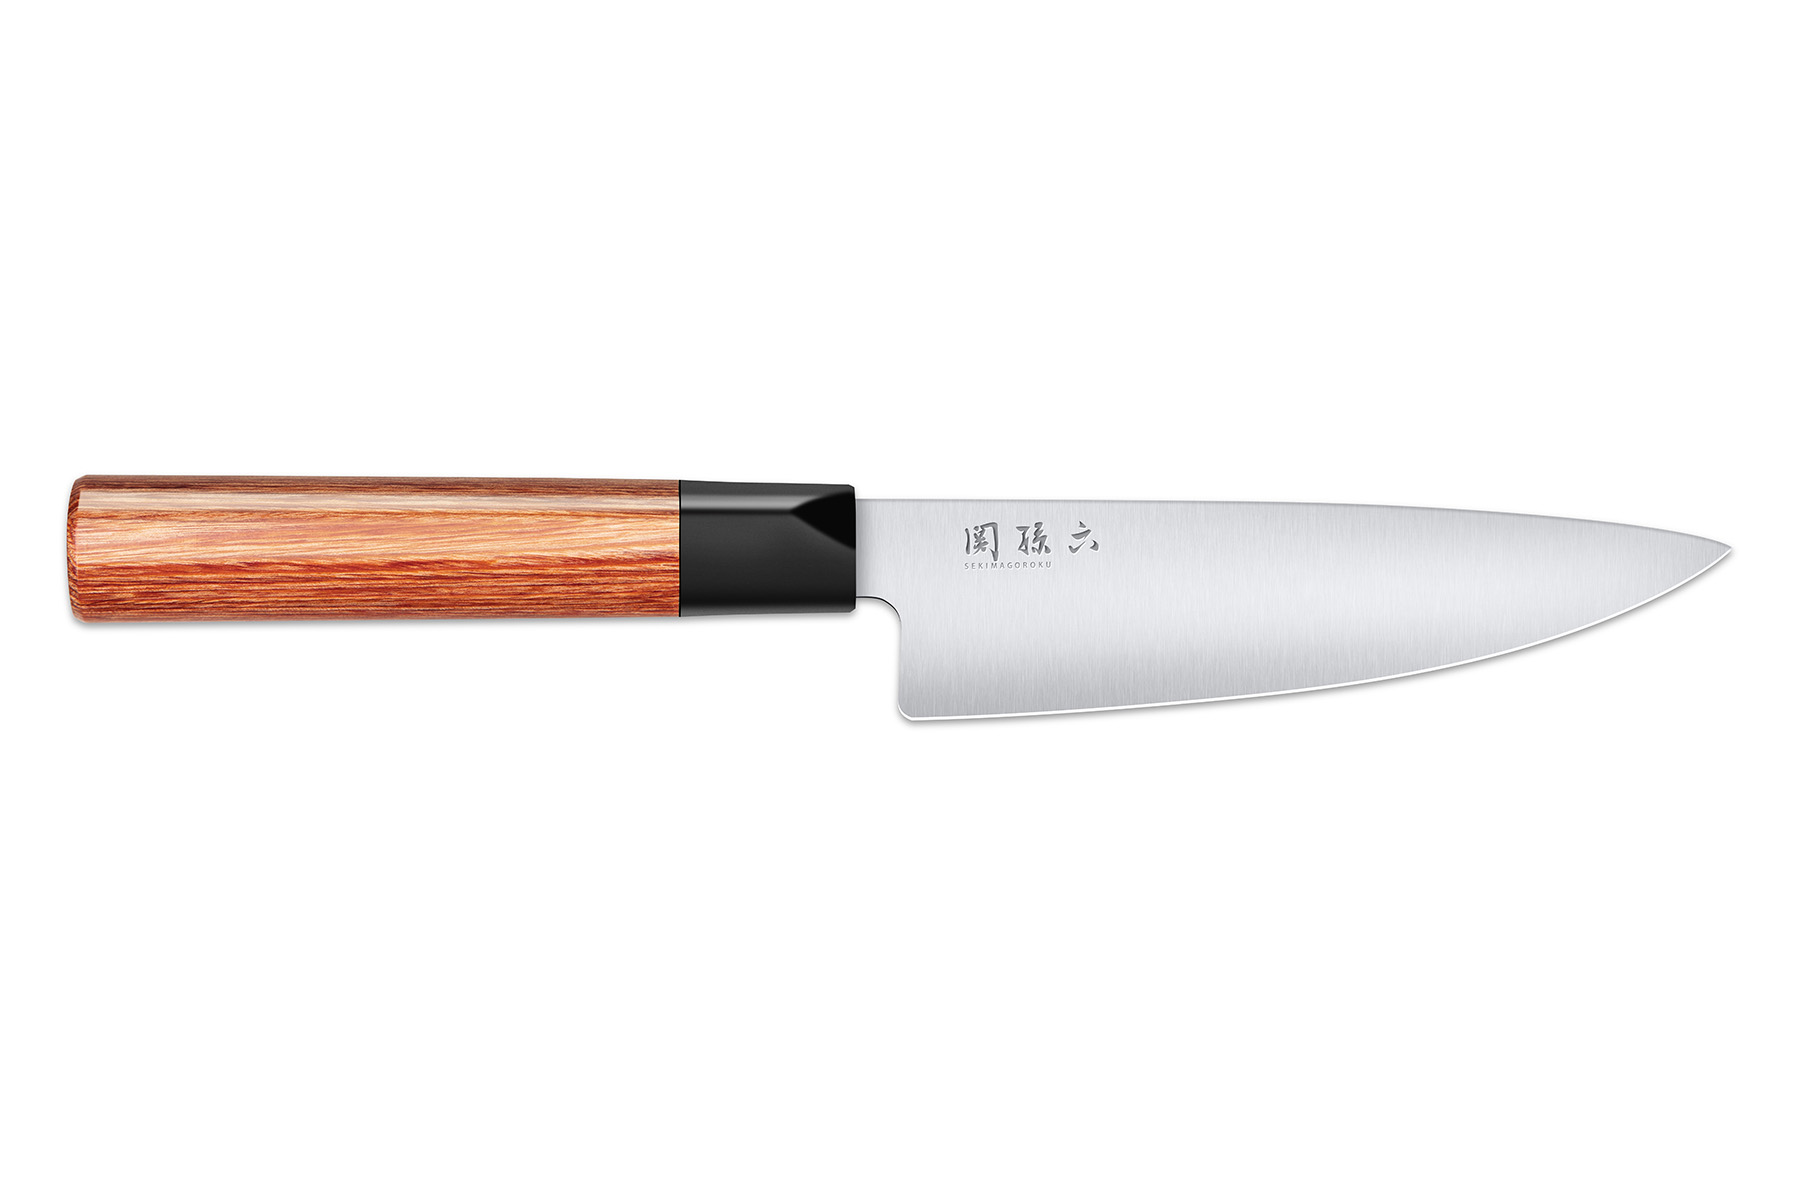 Couteau japonais Kai Seki Magoroku pakkawood (Redwood) - chef 15 cm